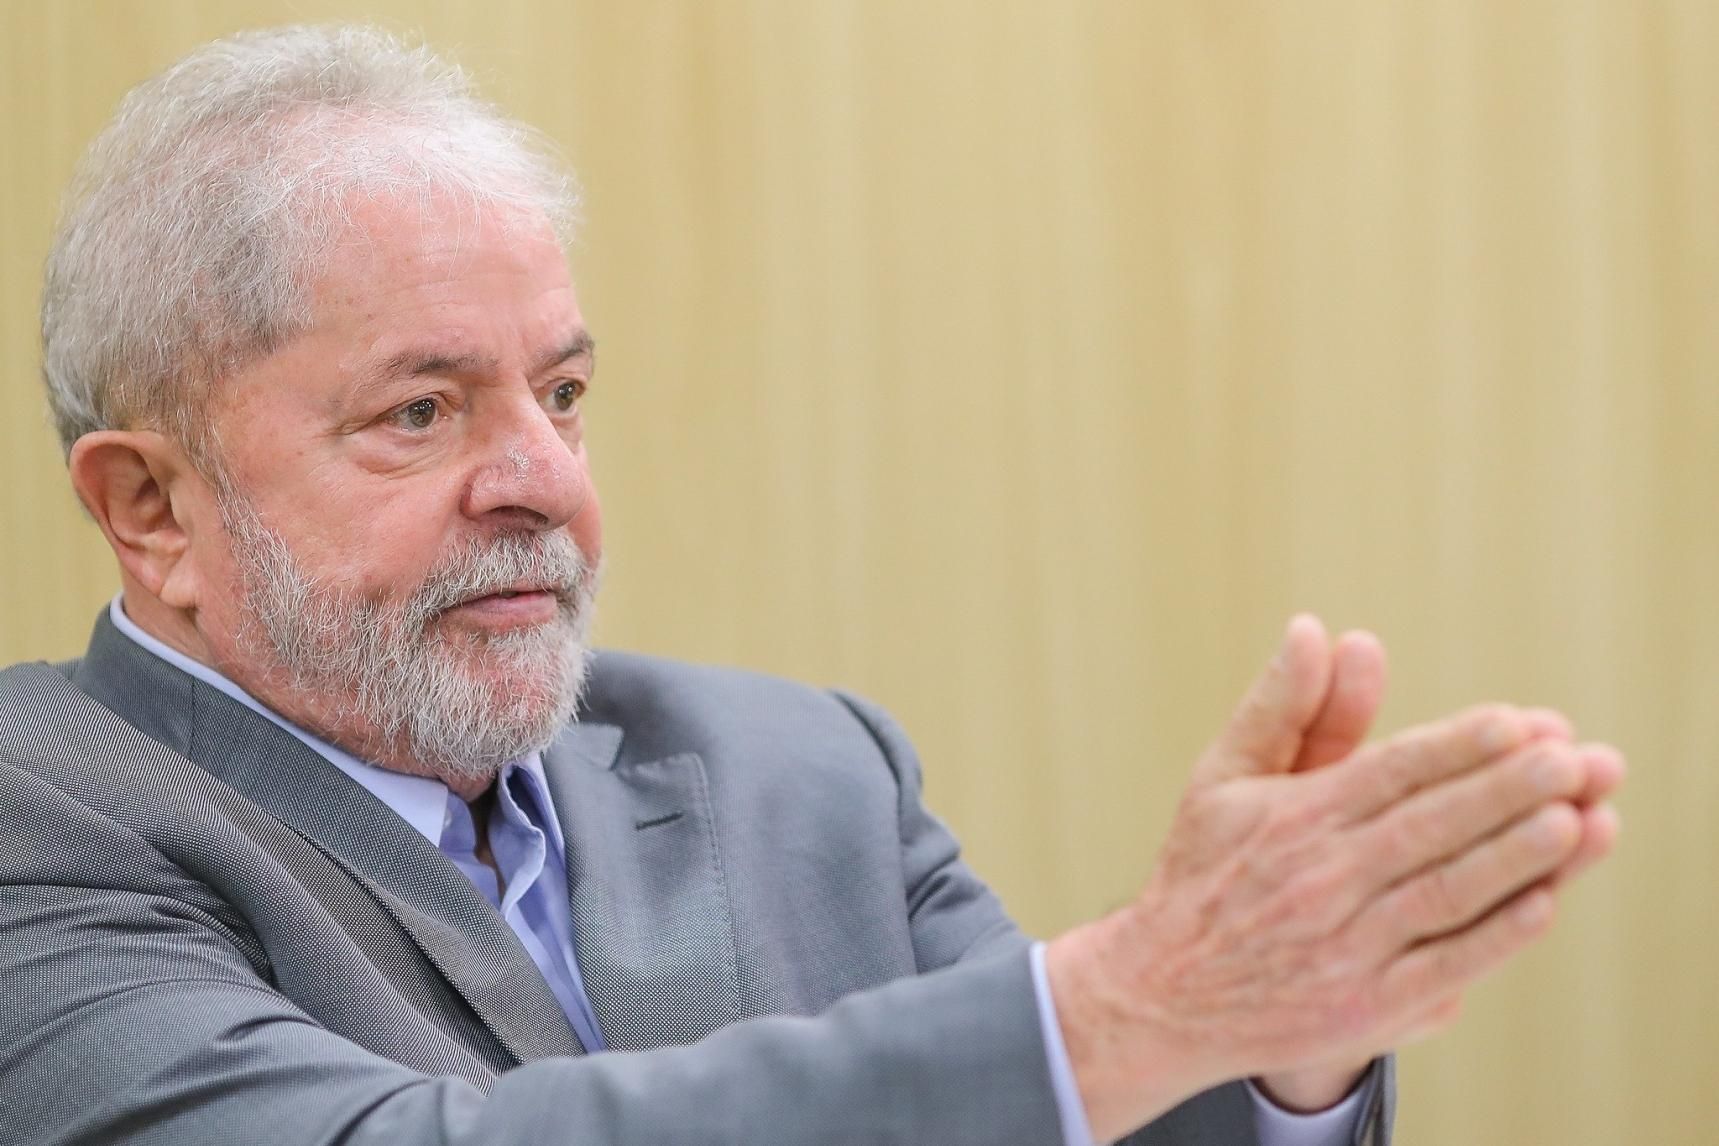 Conheça a obra Orixás, que voltará ao Planalto sob comando de Lula